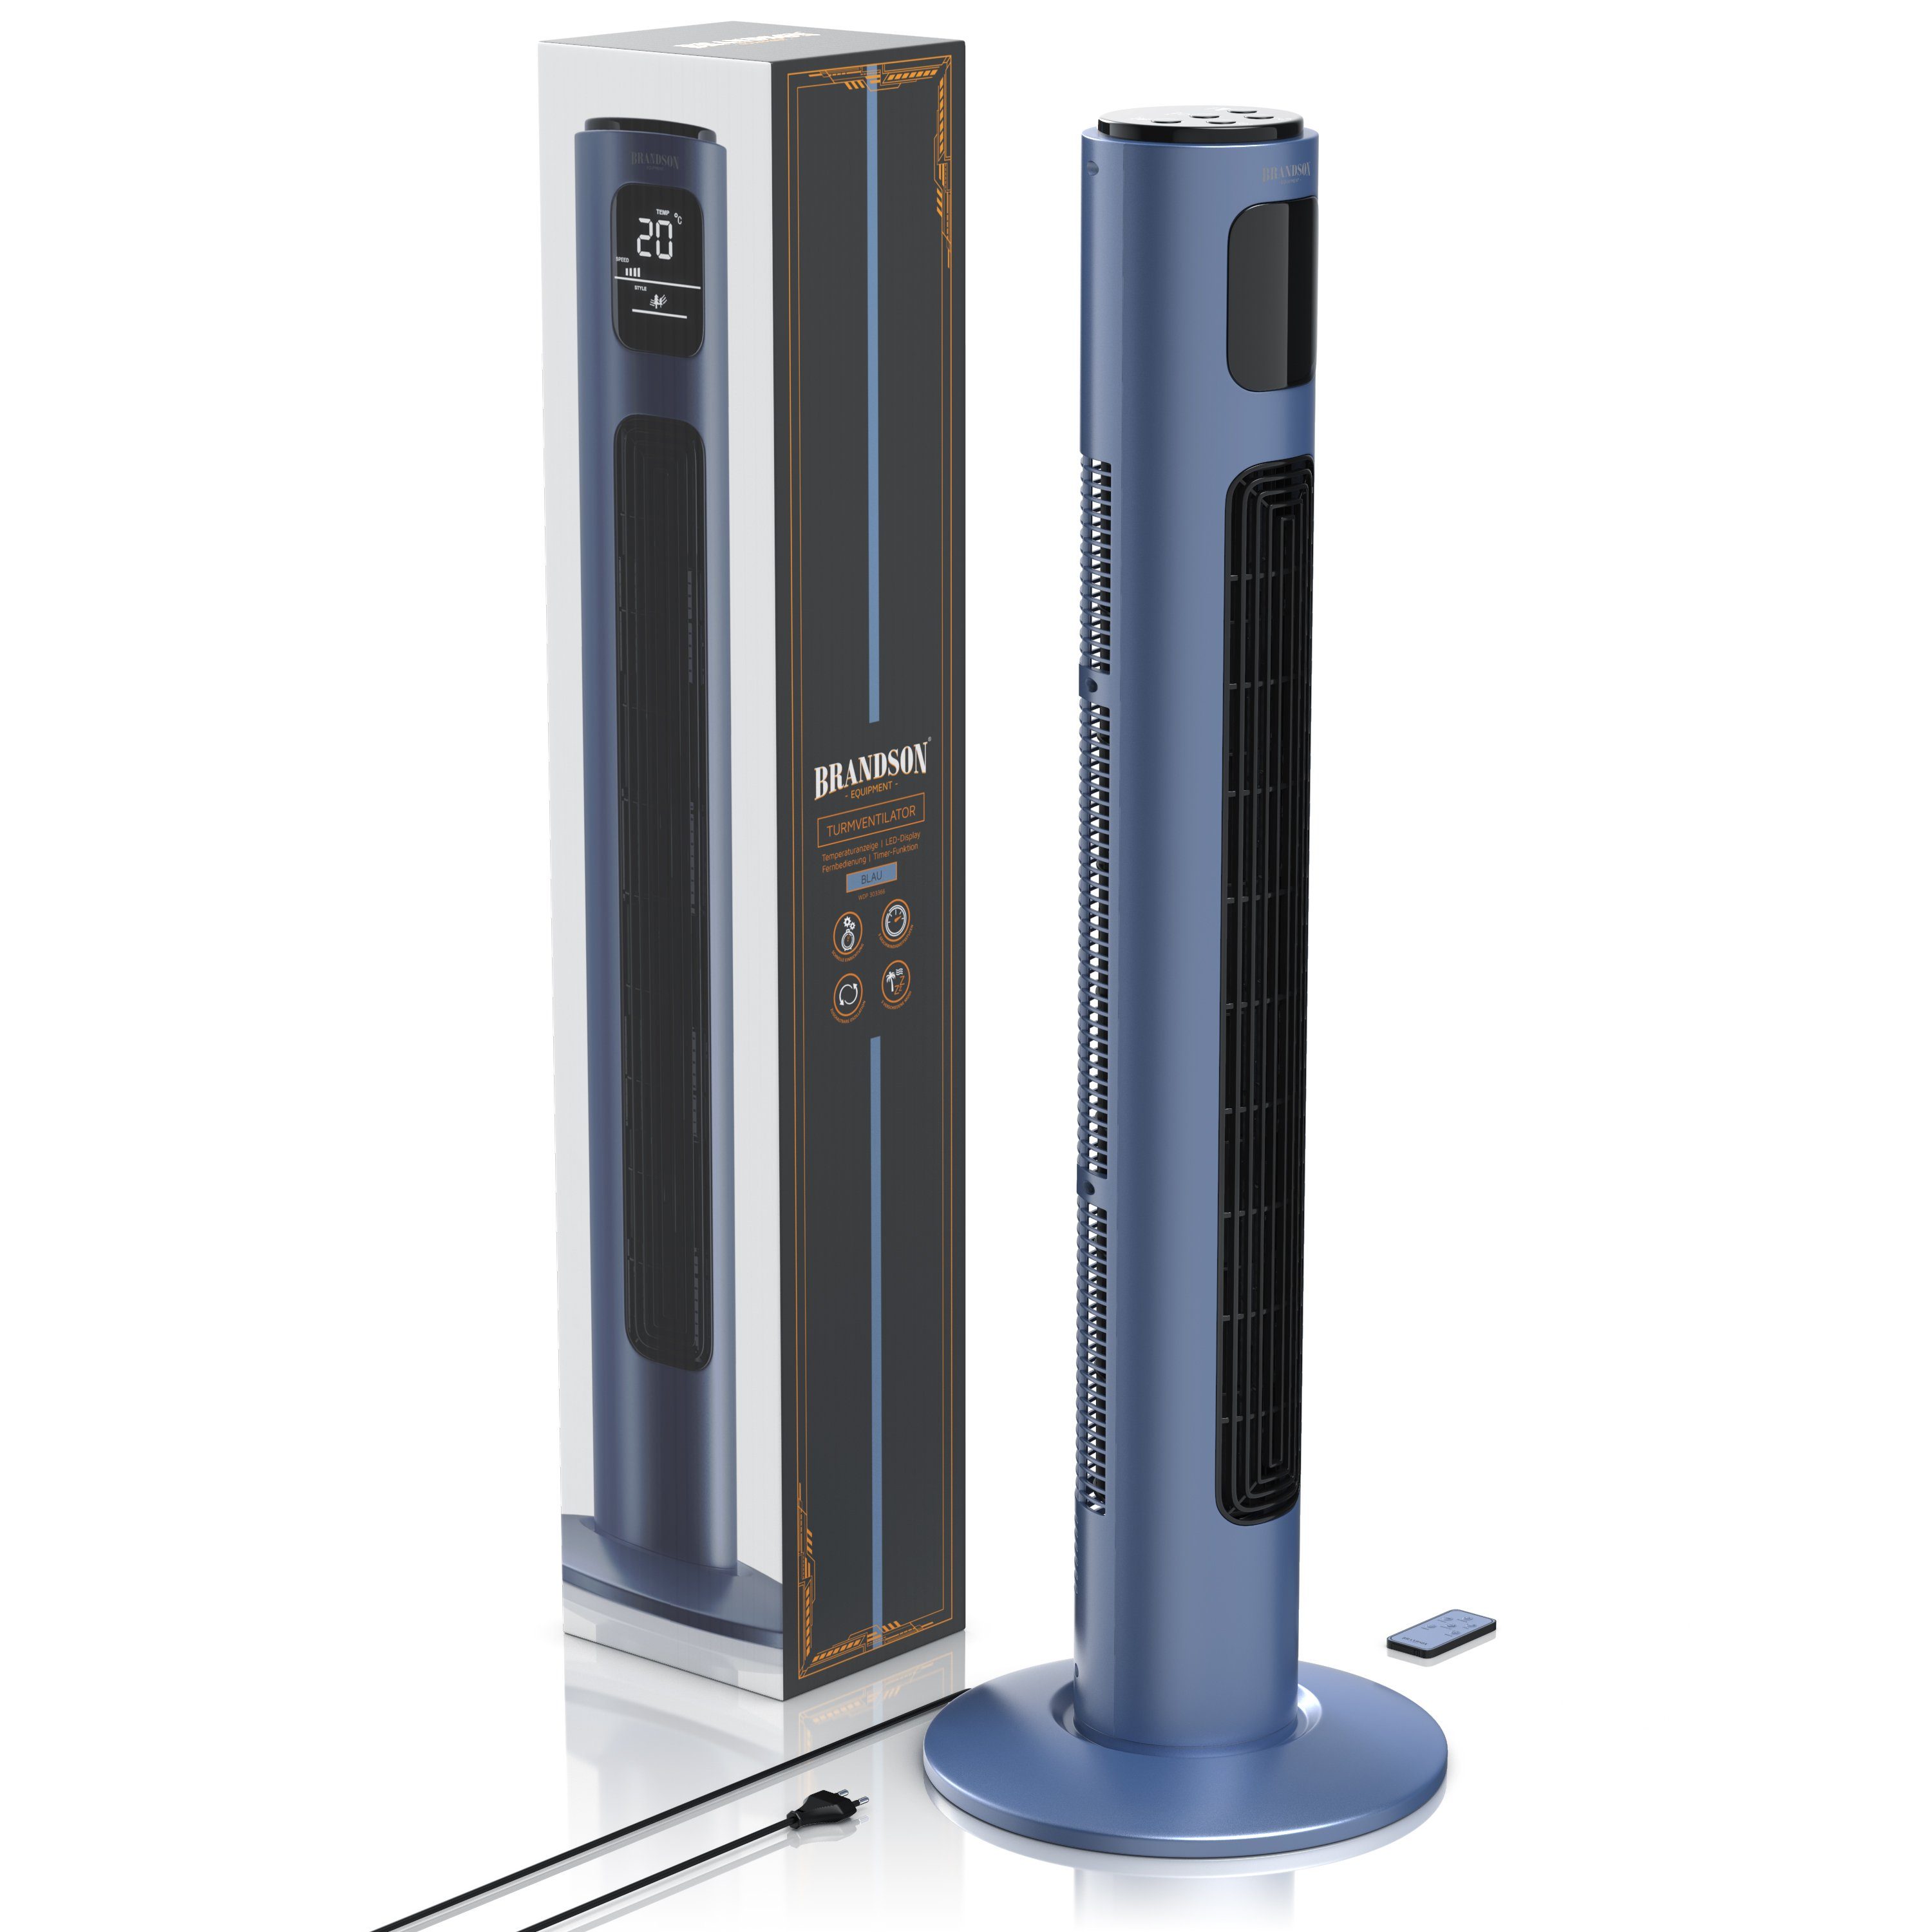 Brandson Turmventilator, Standventilator 96cm, Oszillation Blau Timer, Fernbedienung, 65°